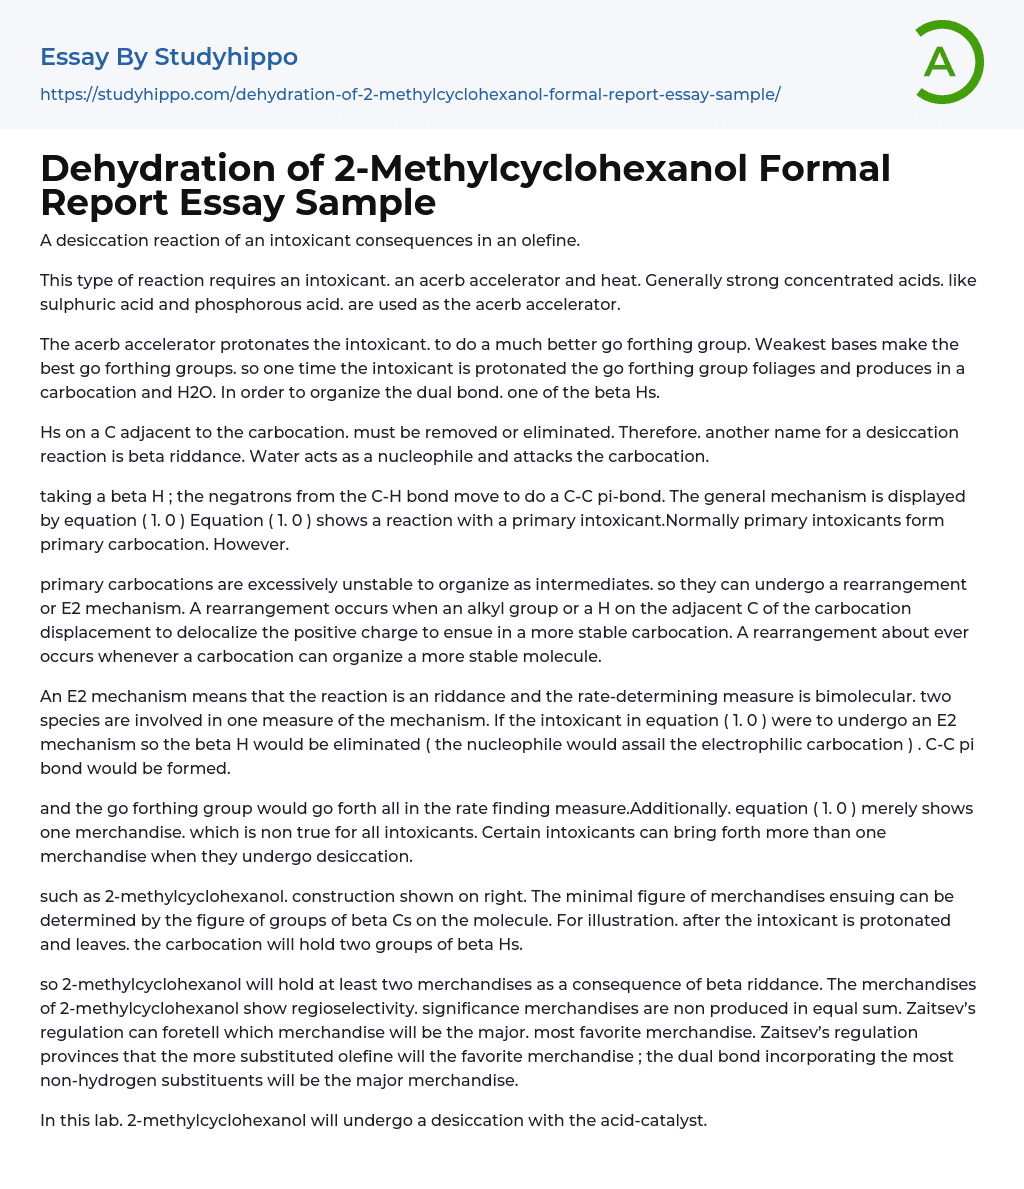 Dehydration of 2-Methylcyclohexanol Formal Report Essay Sample